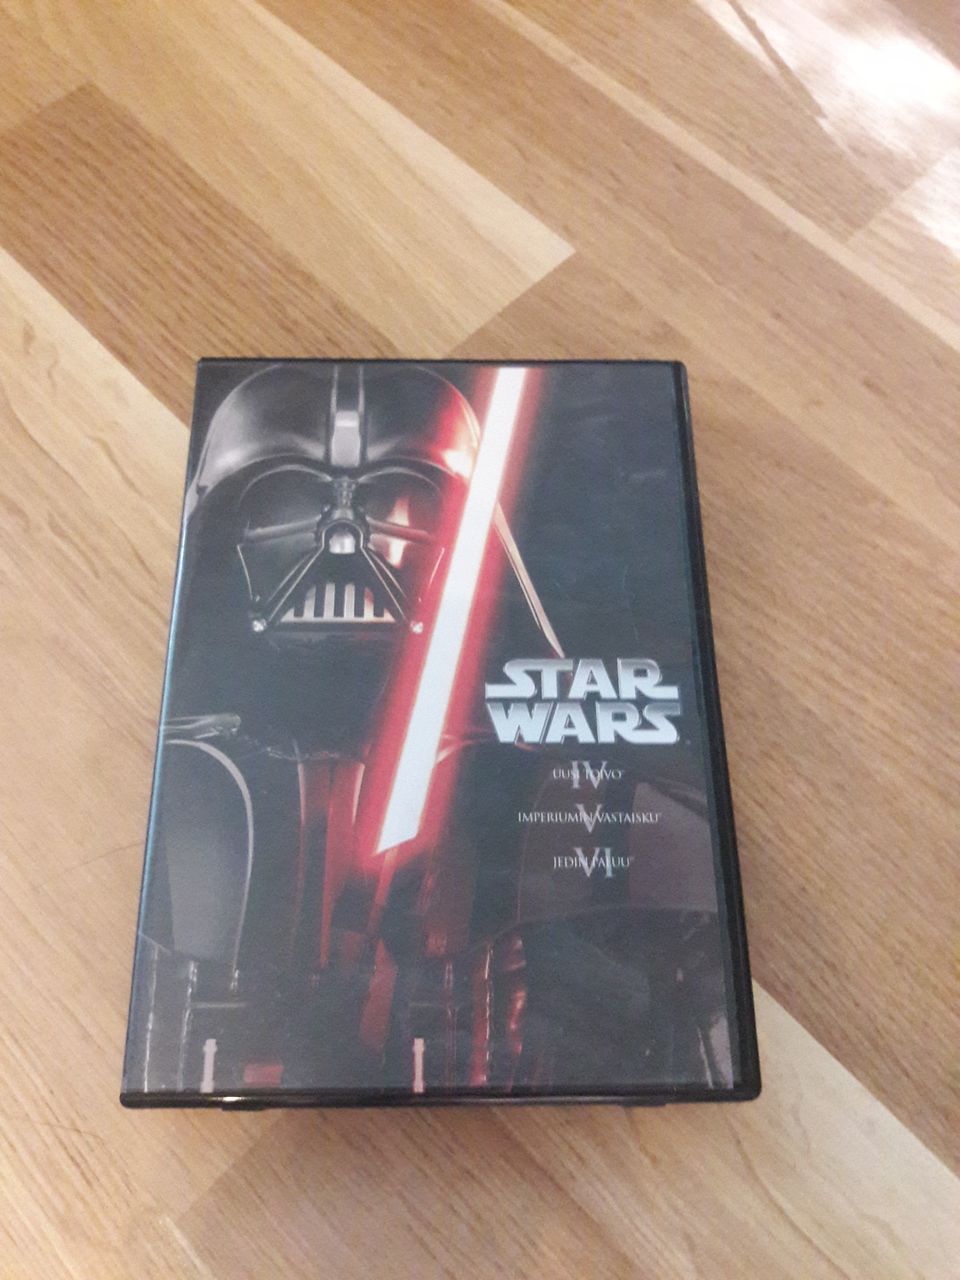 Star wars Trilogy dvd box